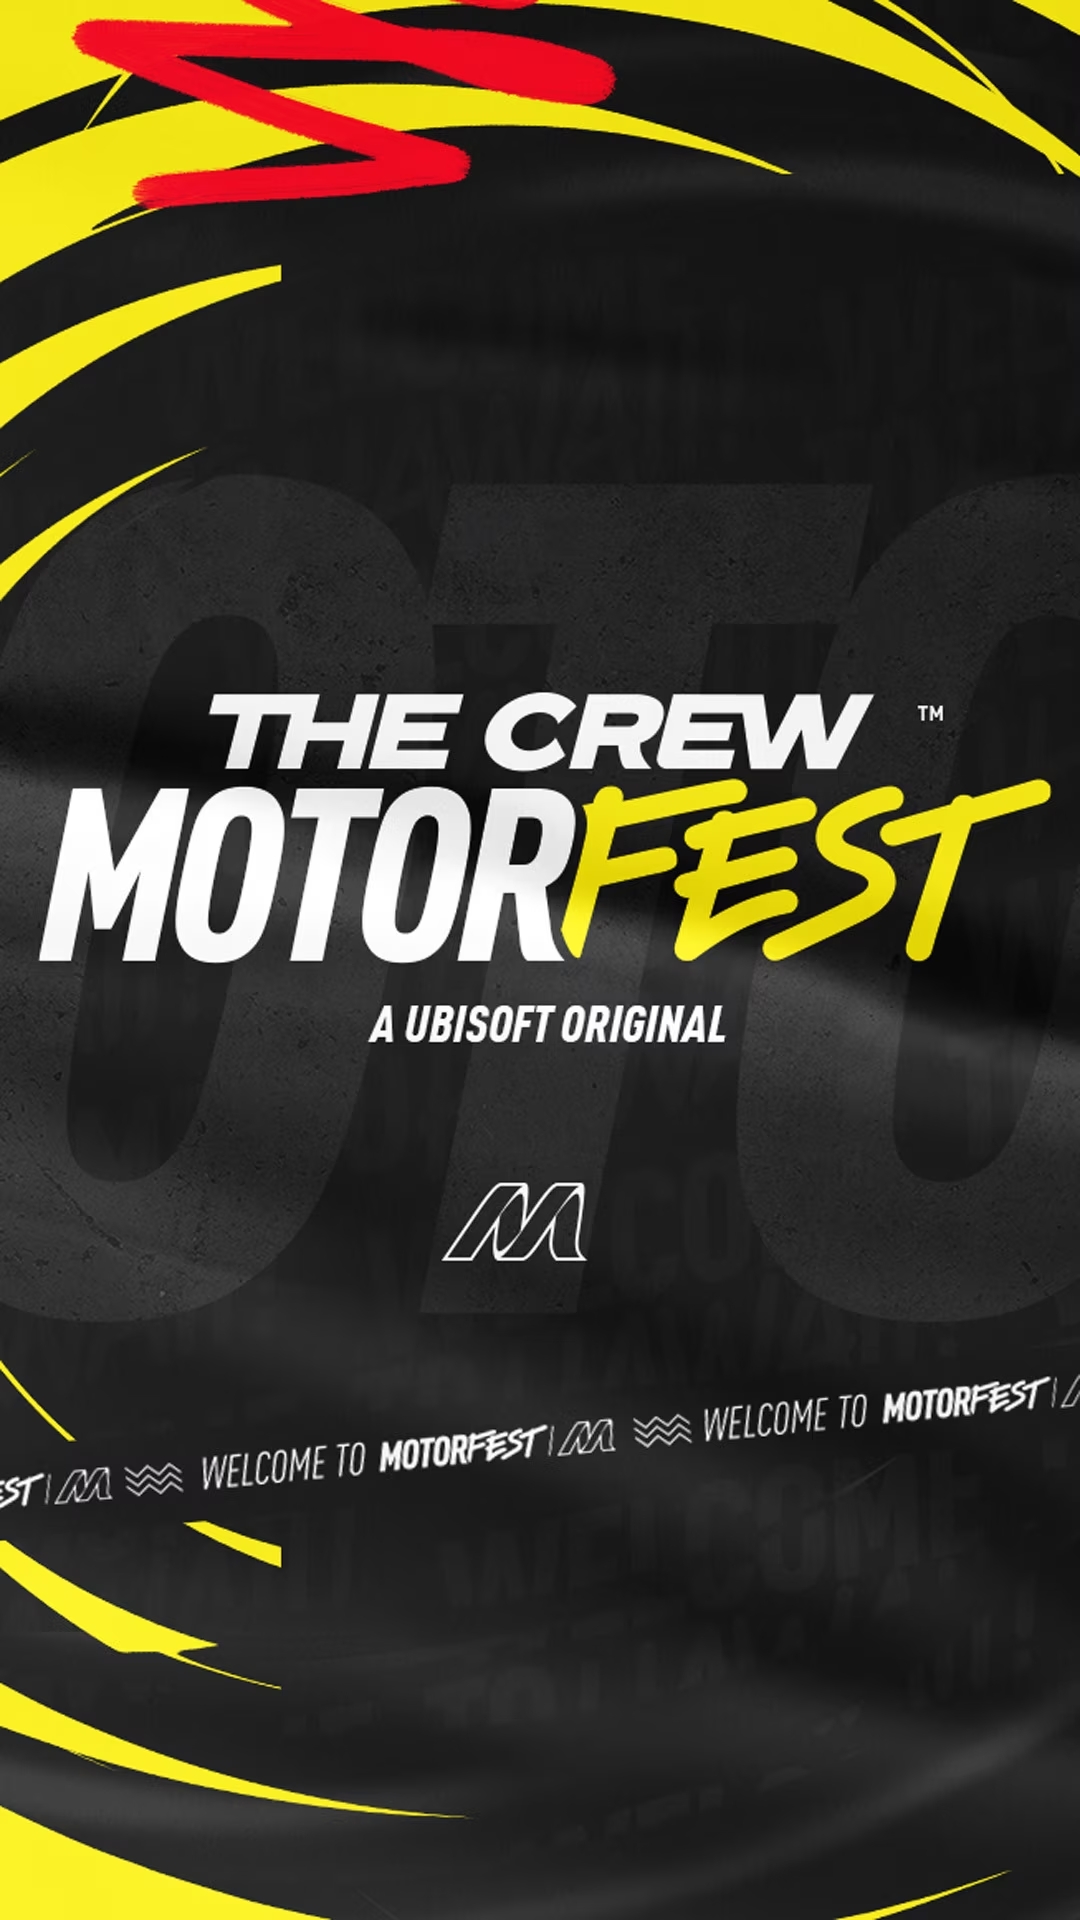 The Crew Motorfest cover